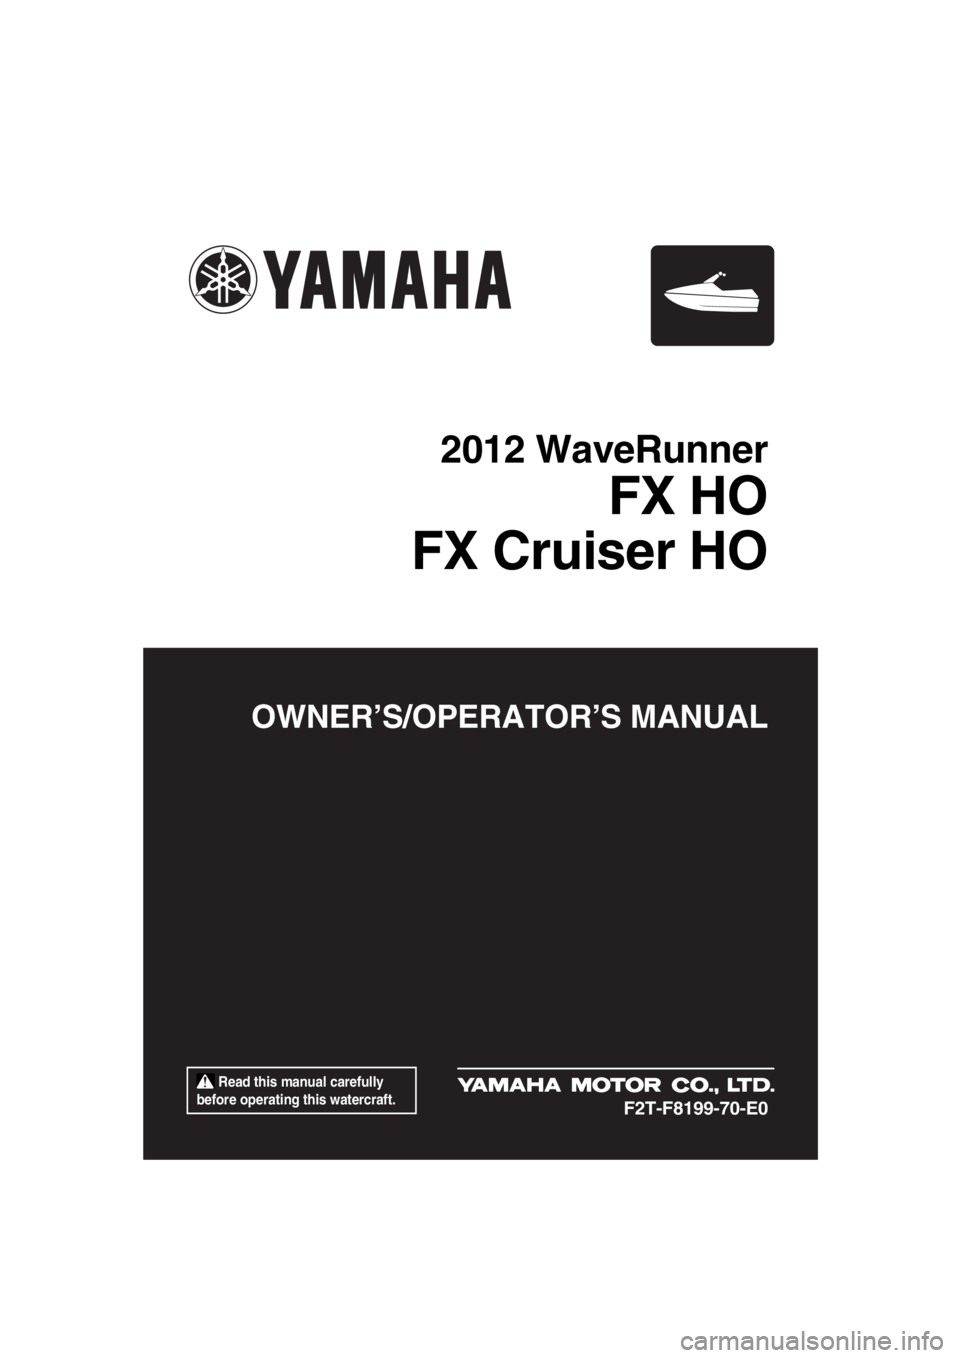 YAMAHA FX HO 2012  Owners Manual 